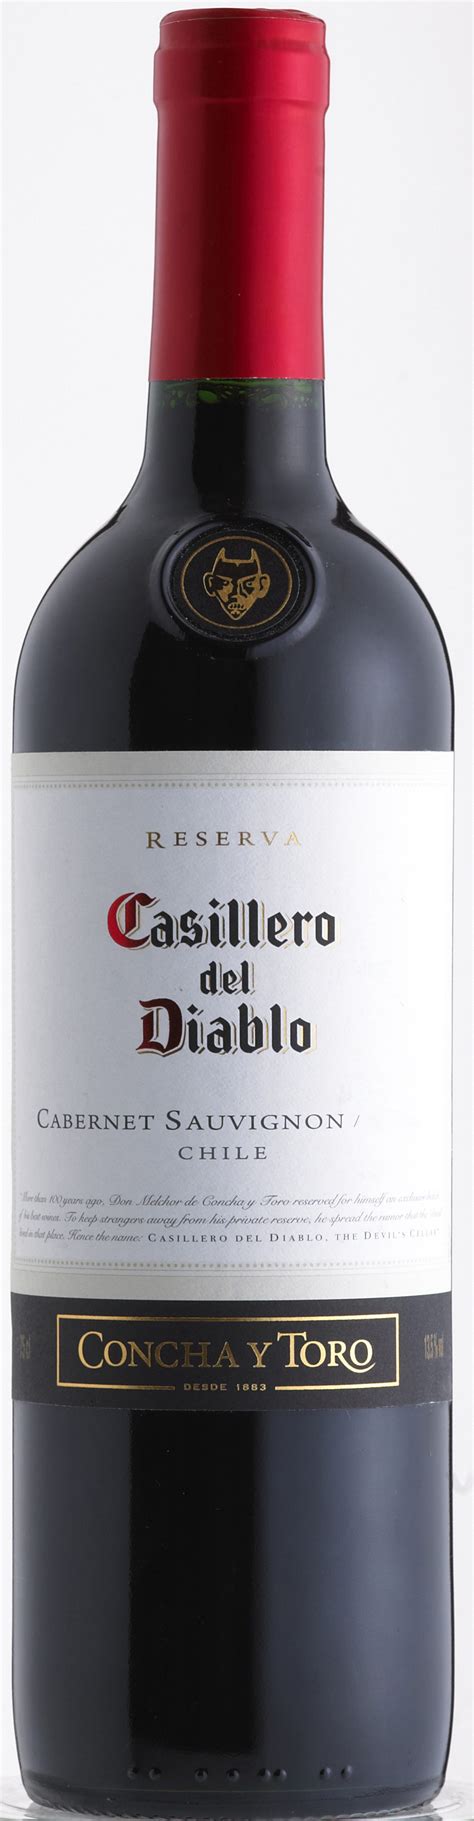 Casillero Del Diablo Cabernet Sauvignon Concha Y Toro 2015 Smag På Vin